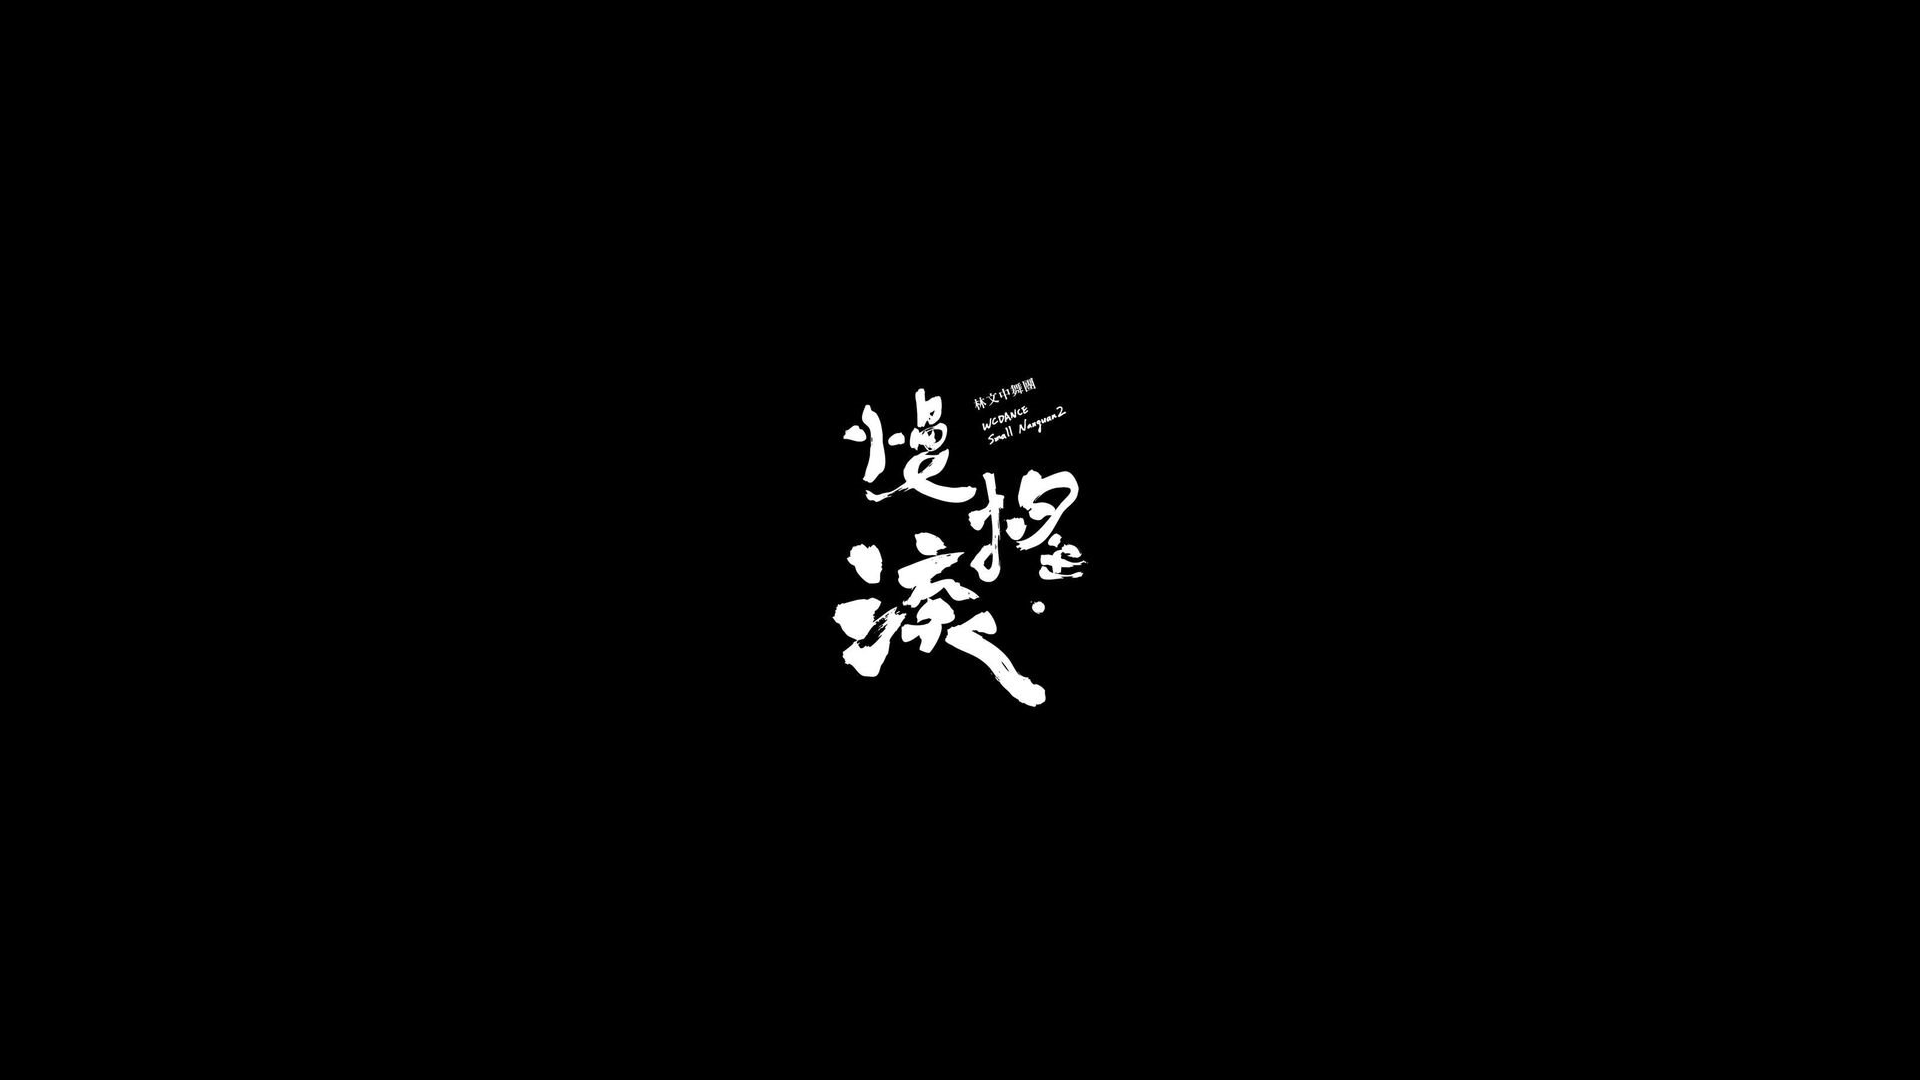 Japan Minimalism Black Japanese Characters Kanji White 19x1080 Wallpaper Wallhaven Cc